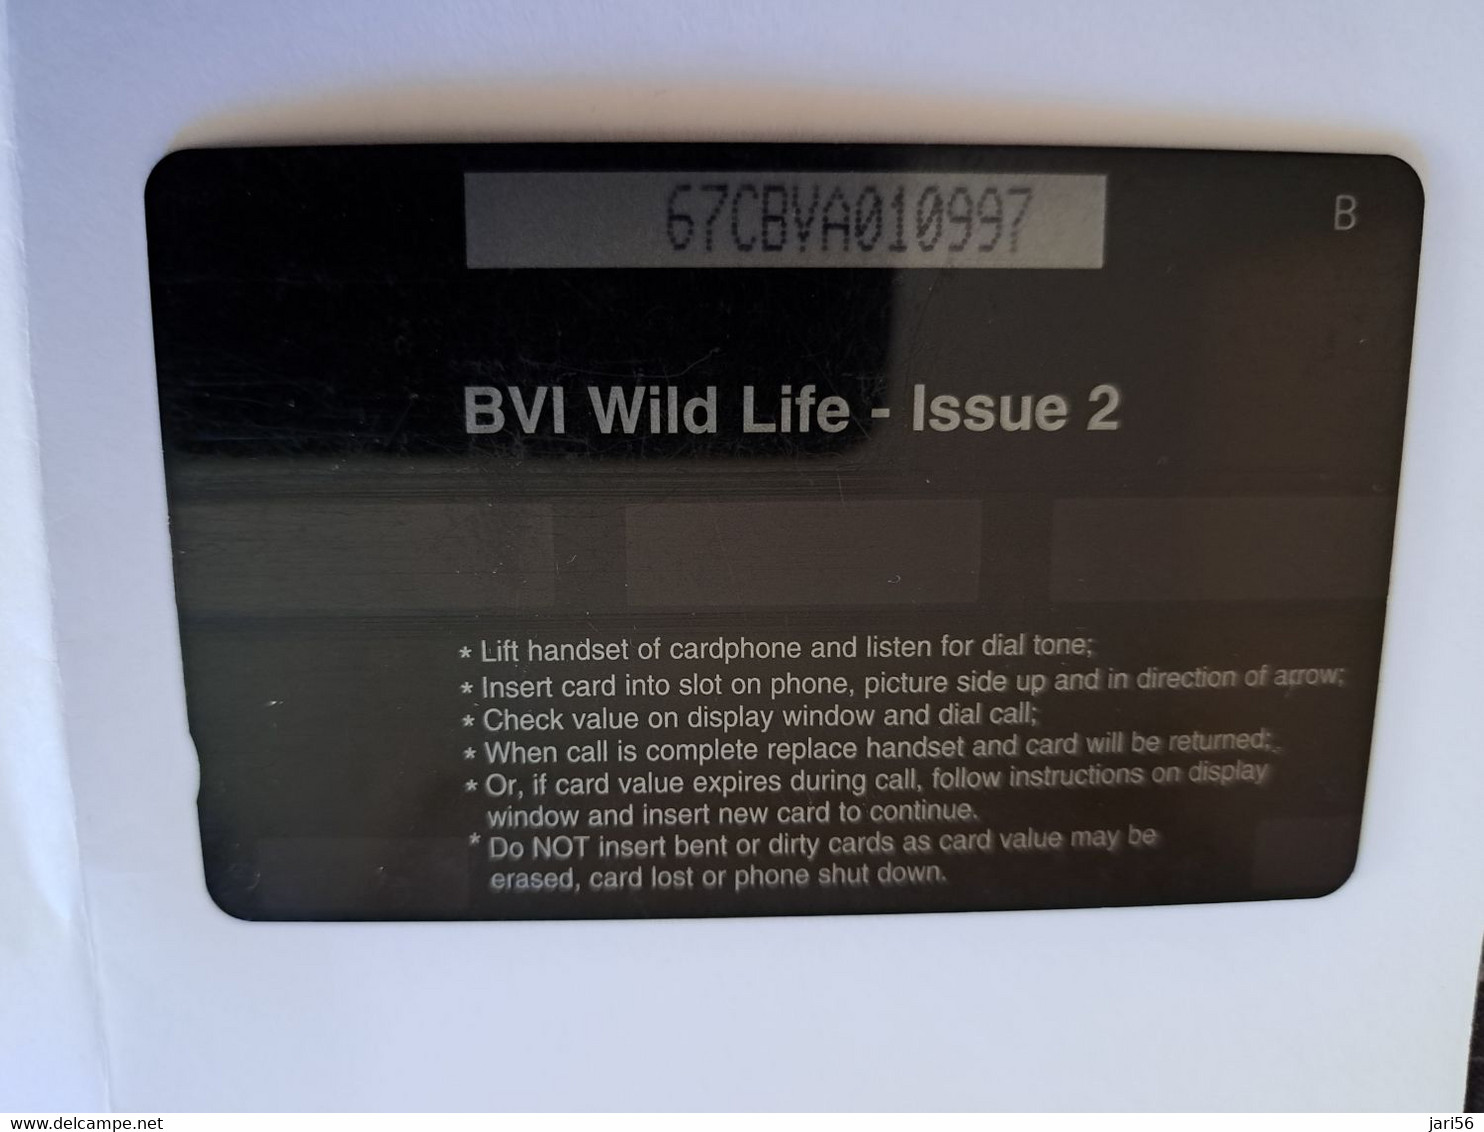 BRITSCH VIRGIN ISLANDS  US$ 5  BVI-67A   HUMMING BIRD    67CBVA     Fine Used Card   ** 11849** - Vierges (îles)